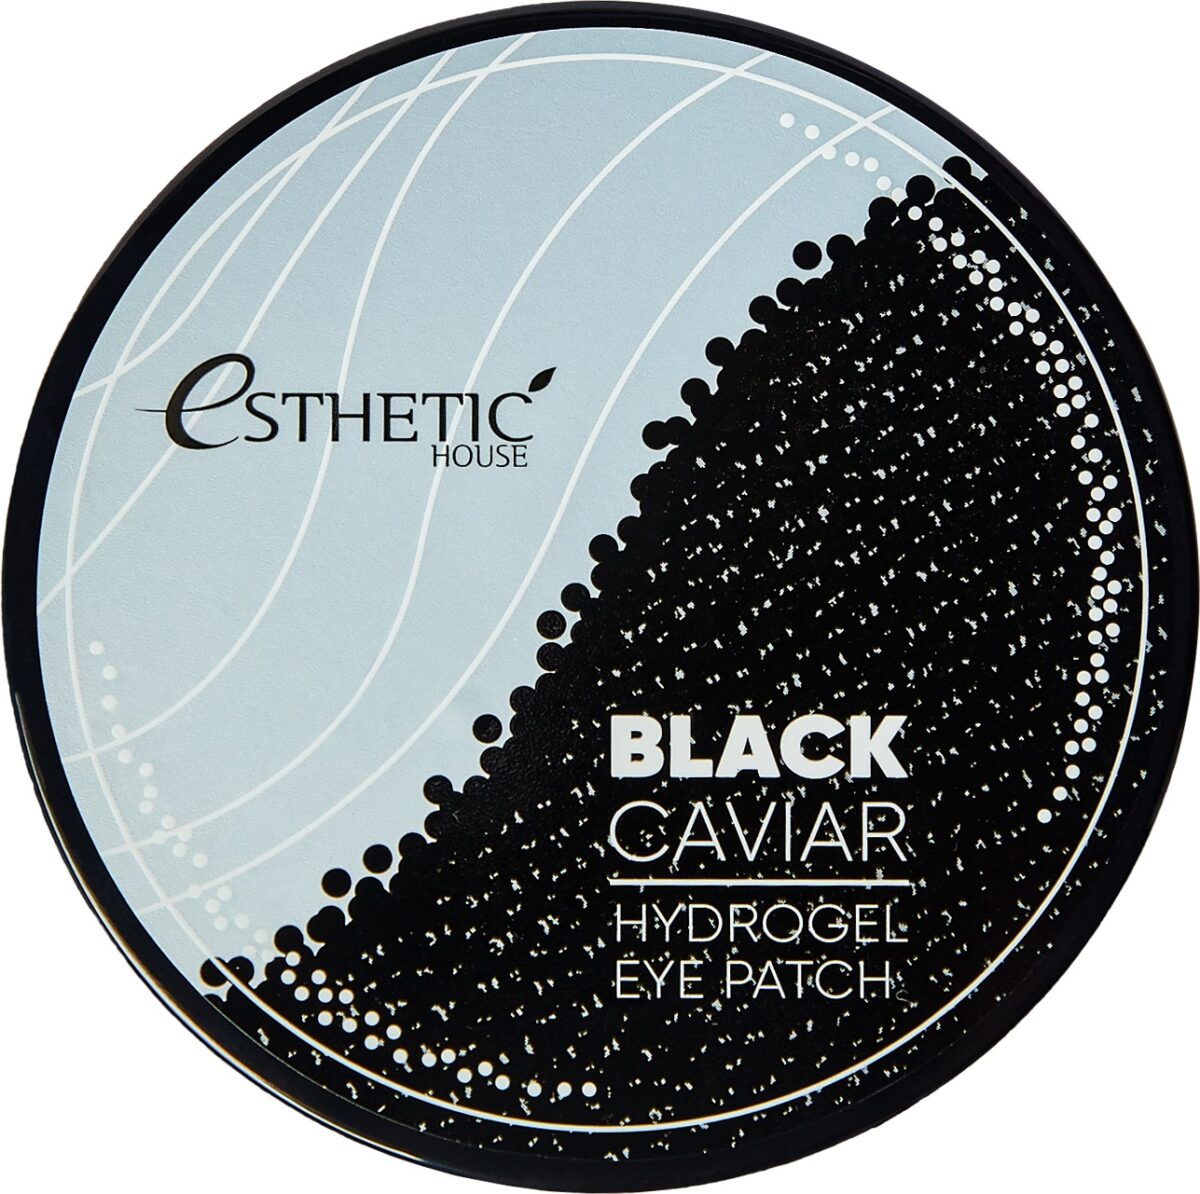 Black Caviar Hydrogel Eye Patch / Гидрогелевые патчи для глаз ЧЕРНАЯ ИКРА, 60 шт, ESTHETIC HOUSE